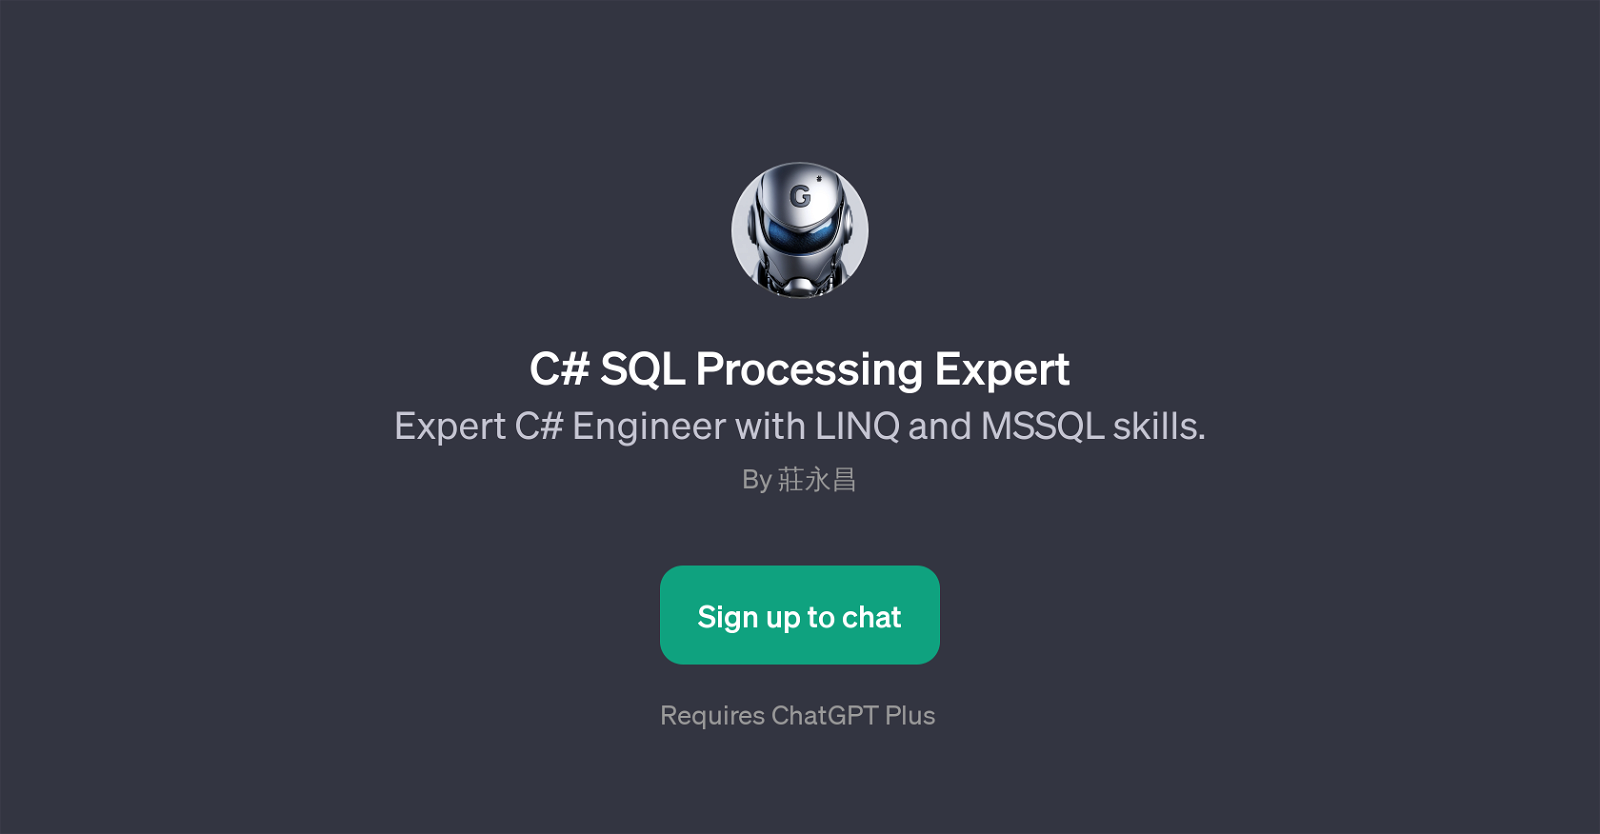 C# SQL Processing Expert website